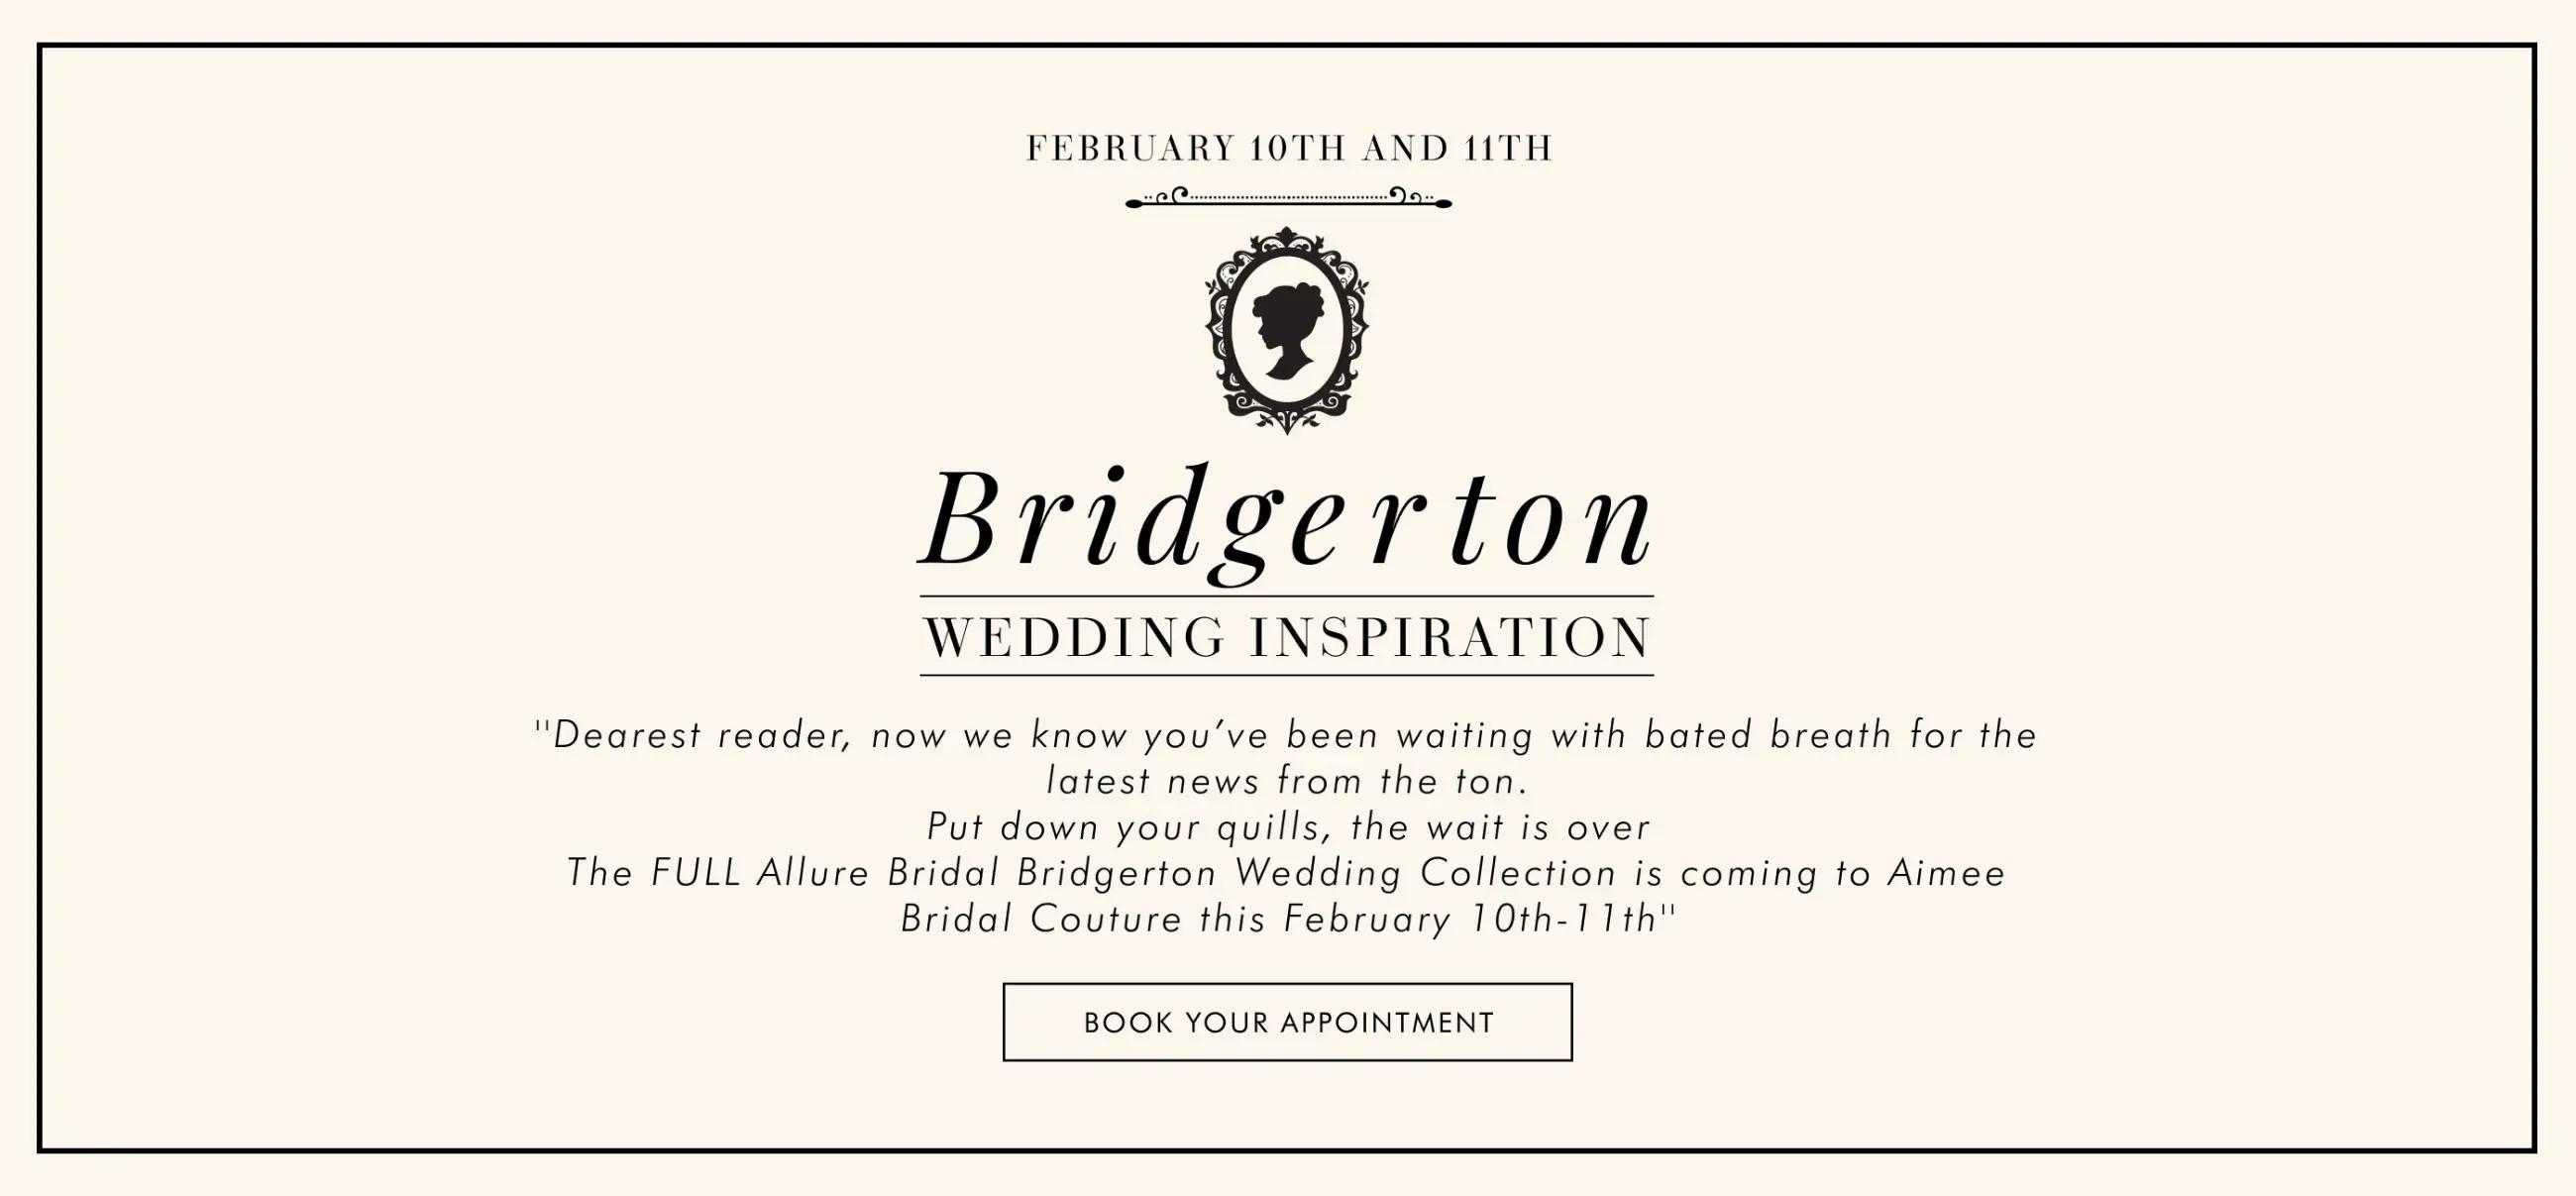 BRIDGERTON Wedding Inspiration